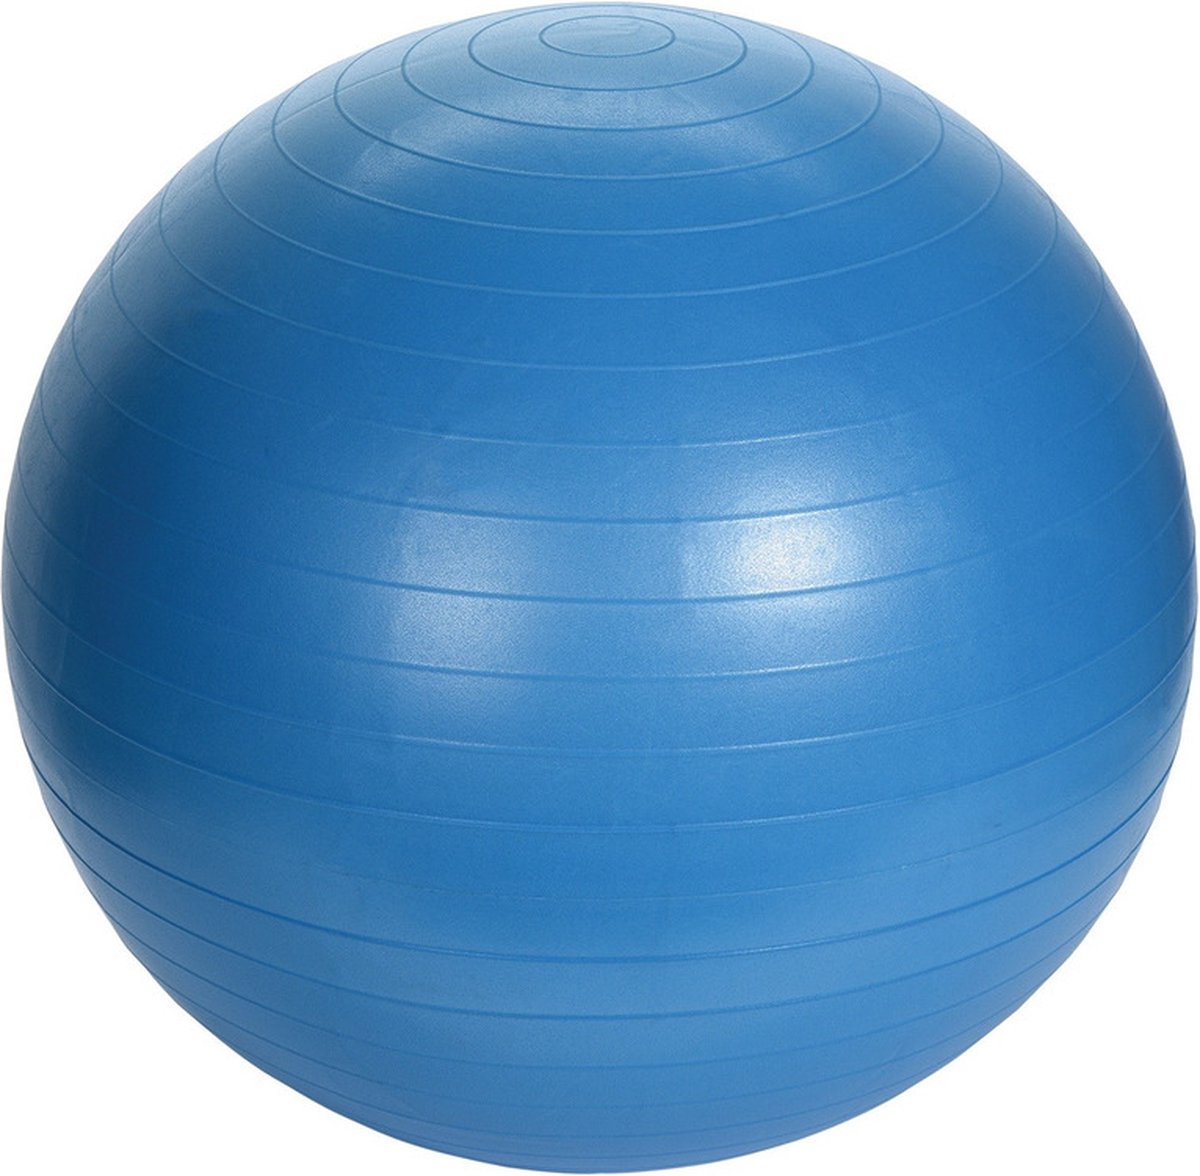 Grote blauwe fitnessbal/yogabal inclusief pomp 75 cm sport fitnessartikelen - Fitness/sport artikelen - Homegym producten